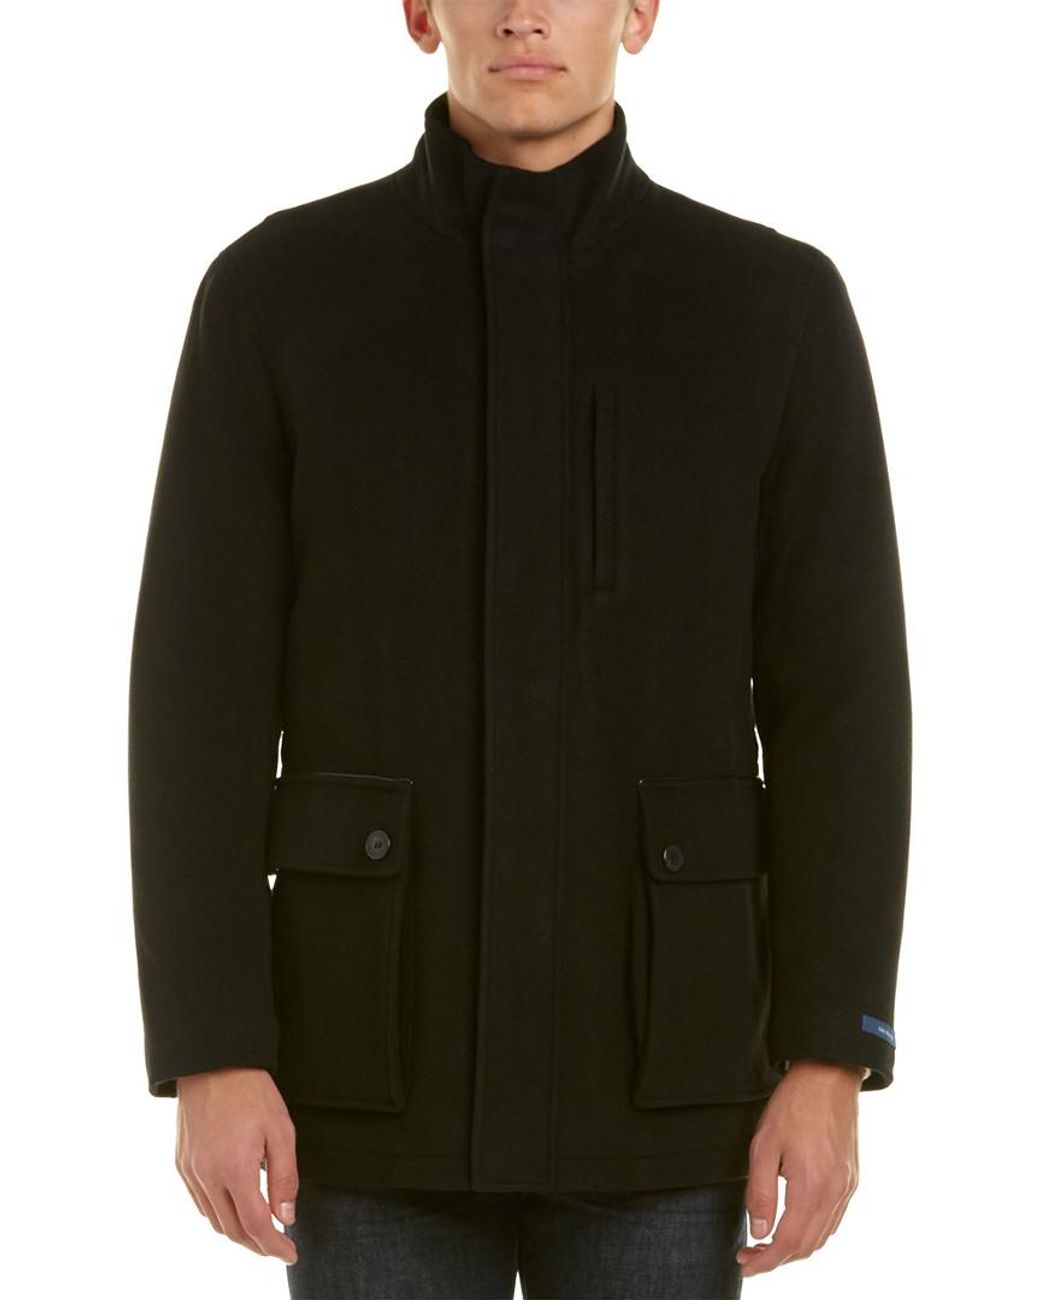 Cole Haan Wool & Cashmere-blend Coat in Black for Men - Lyst